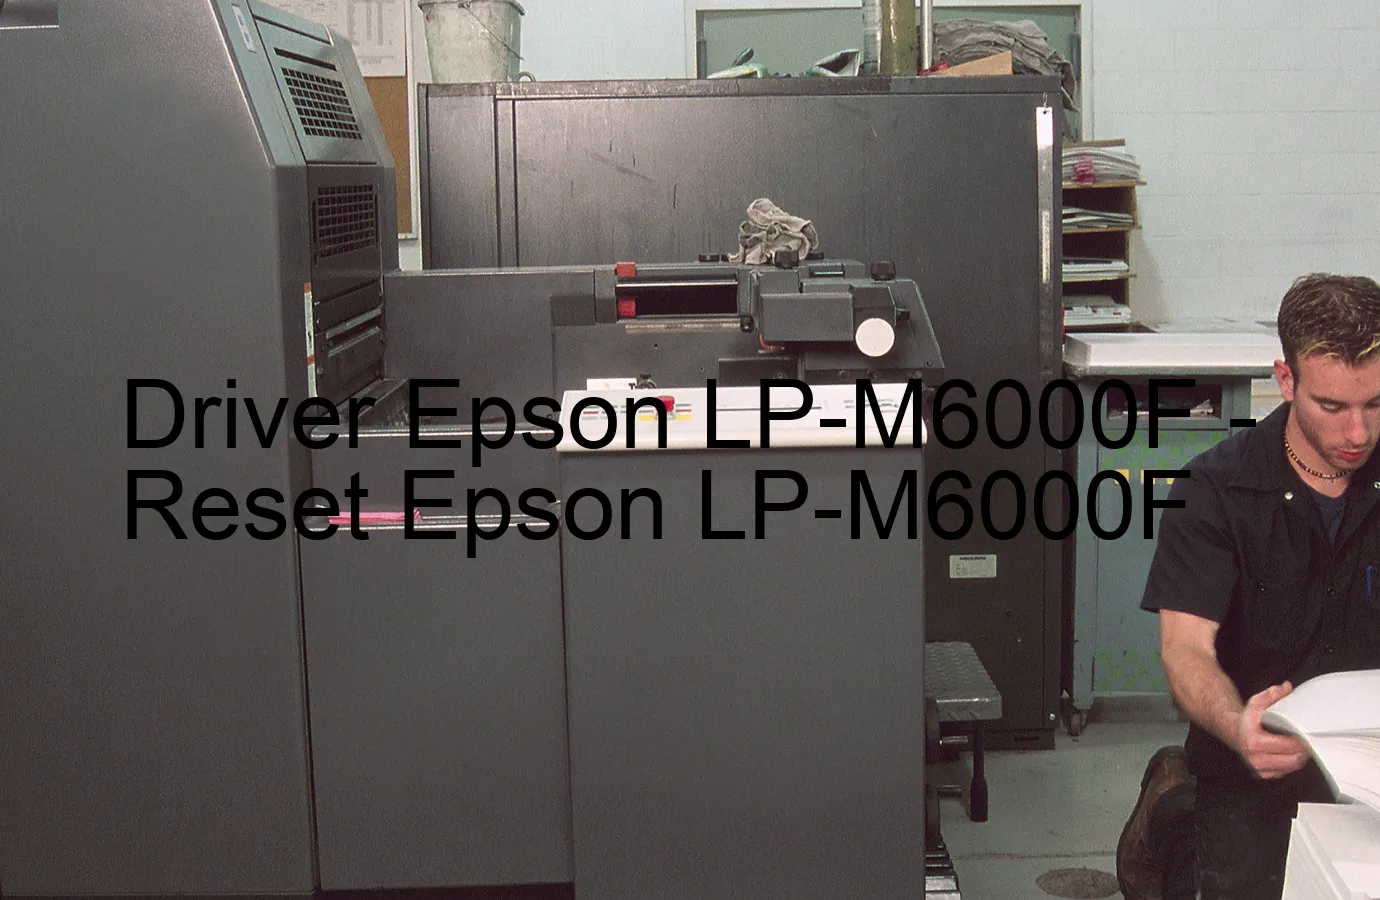 Epson LP-M6000Fのドライバー、Epson LP-M6000Fのリセットソフトウェア